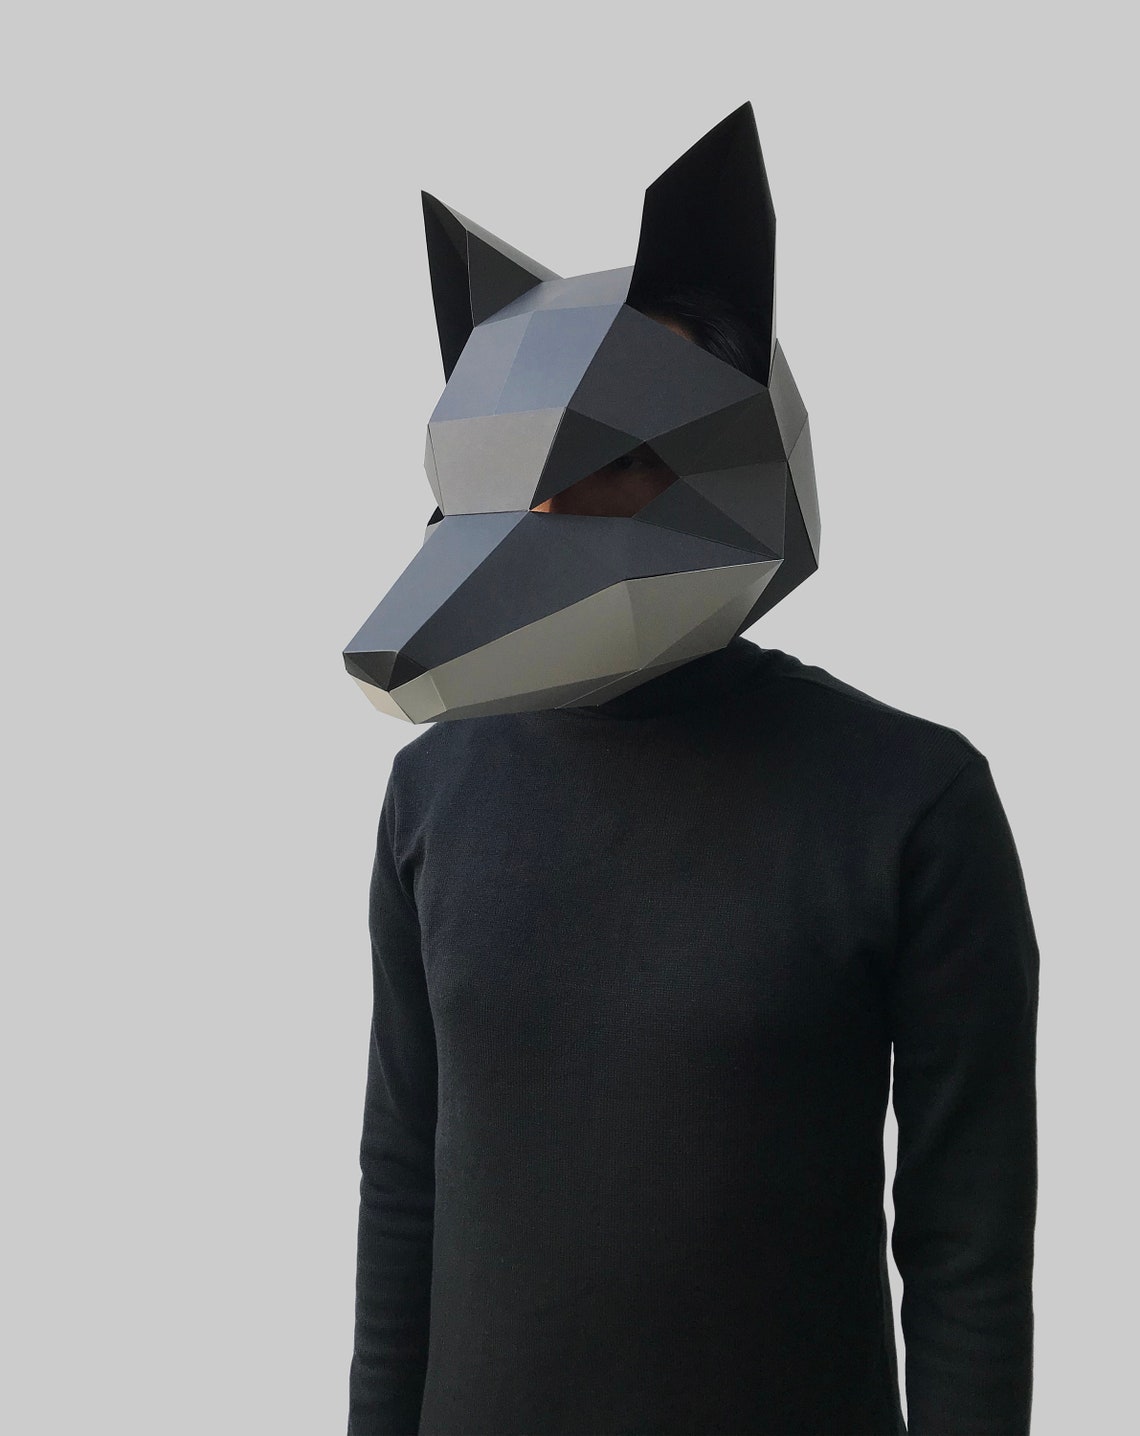 Silver Fox Mask Template Paper Mask Papercraft Mask Masks - Etsy